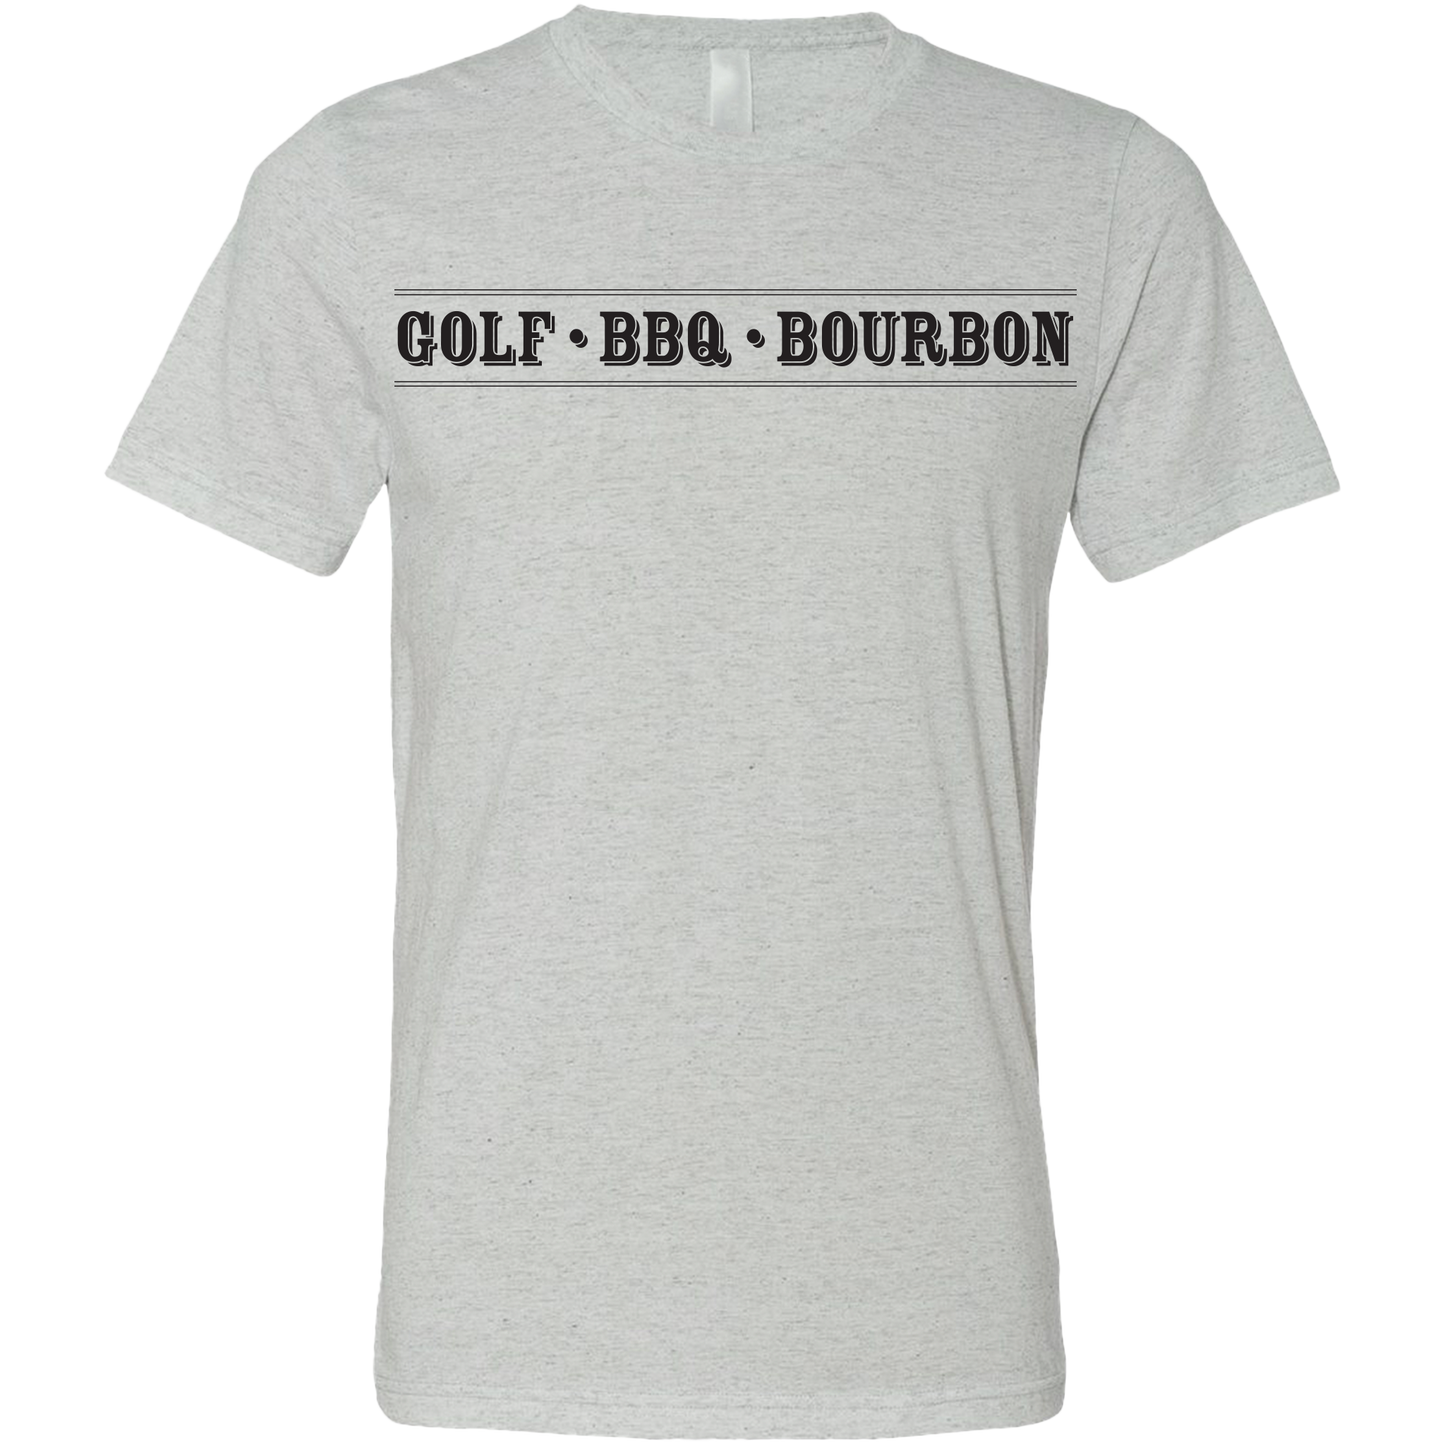 Golf BBQ & Bourbon Unisex T-Shirt SwingJuice